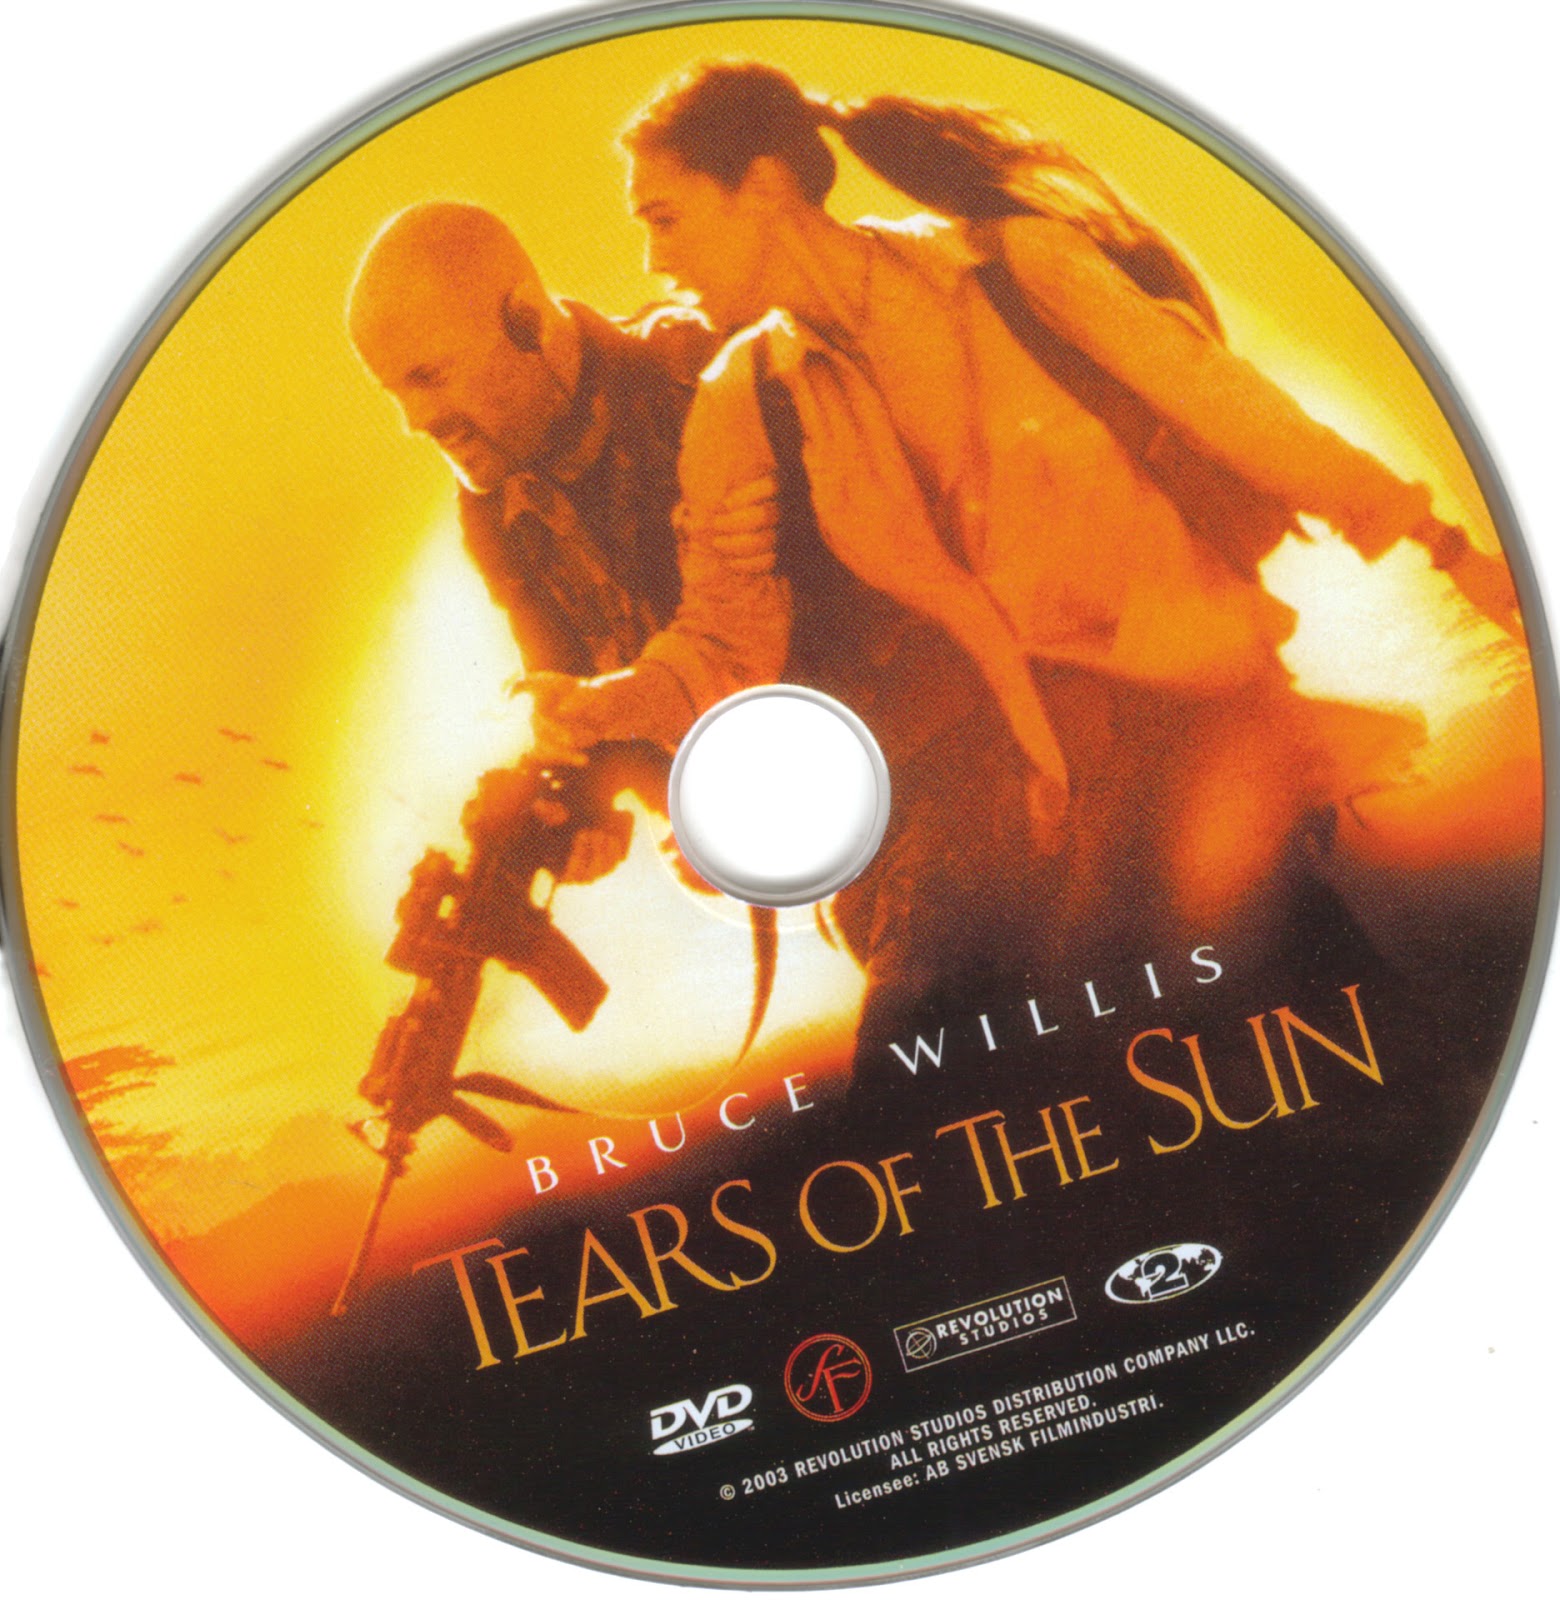 http://3.bp.blogspot.com/-paxl7zCAKCo/T3KNSyyiY0I/AAAAAAAAABs/anz9z3Un6jY/s1600/Tears-of-The-Sun-2003-Dvd-Label-Art1.jpg